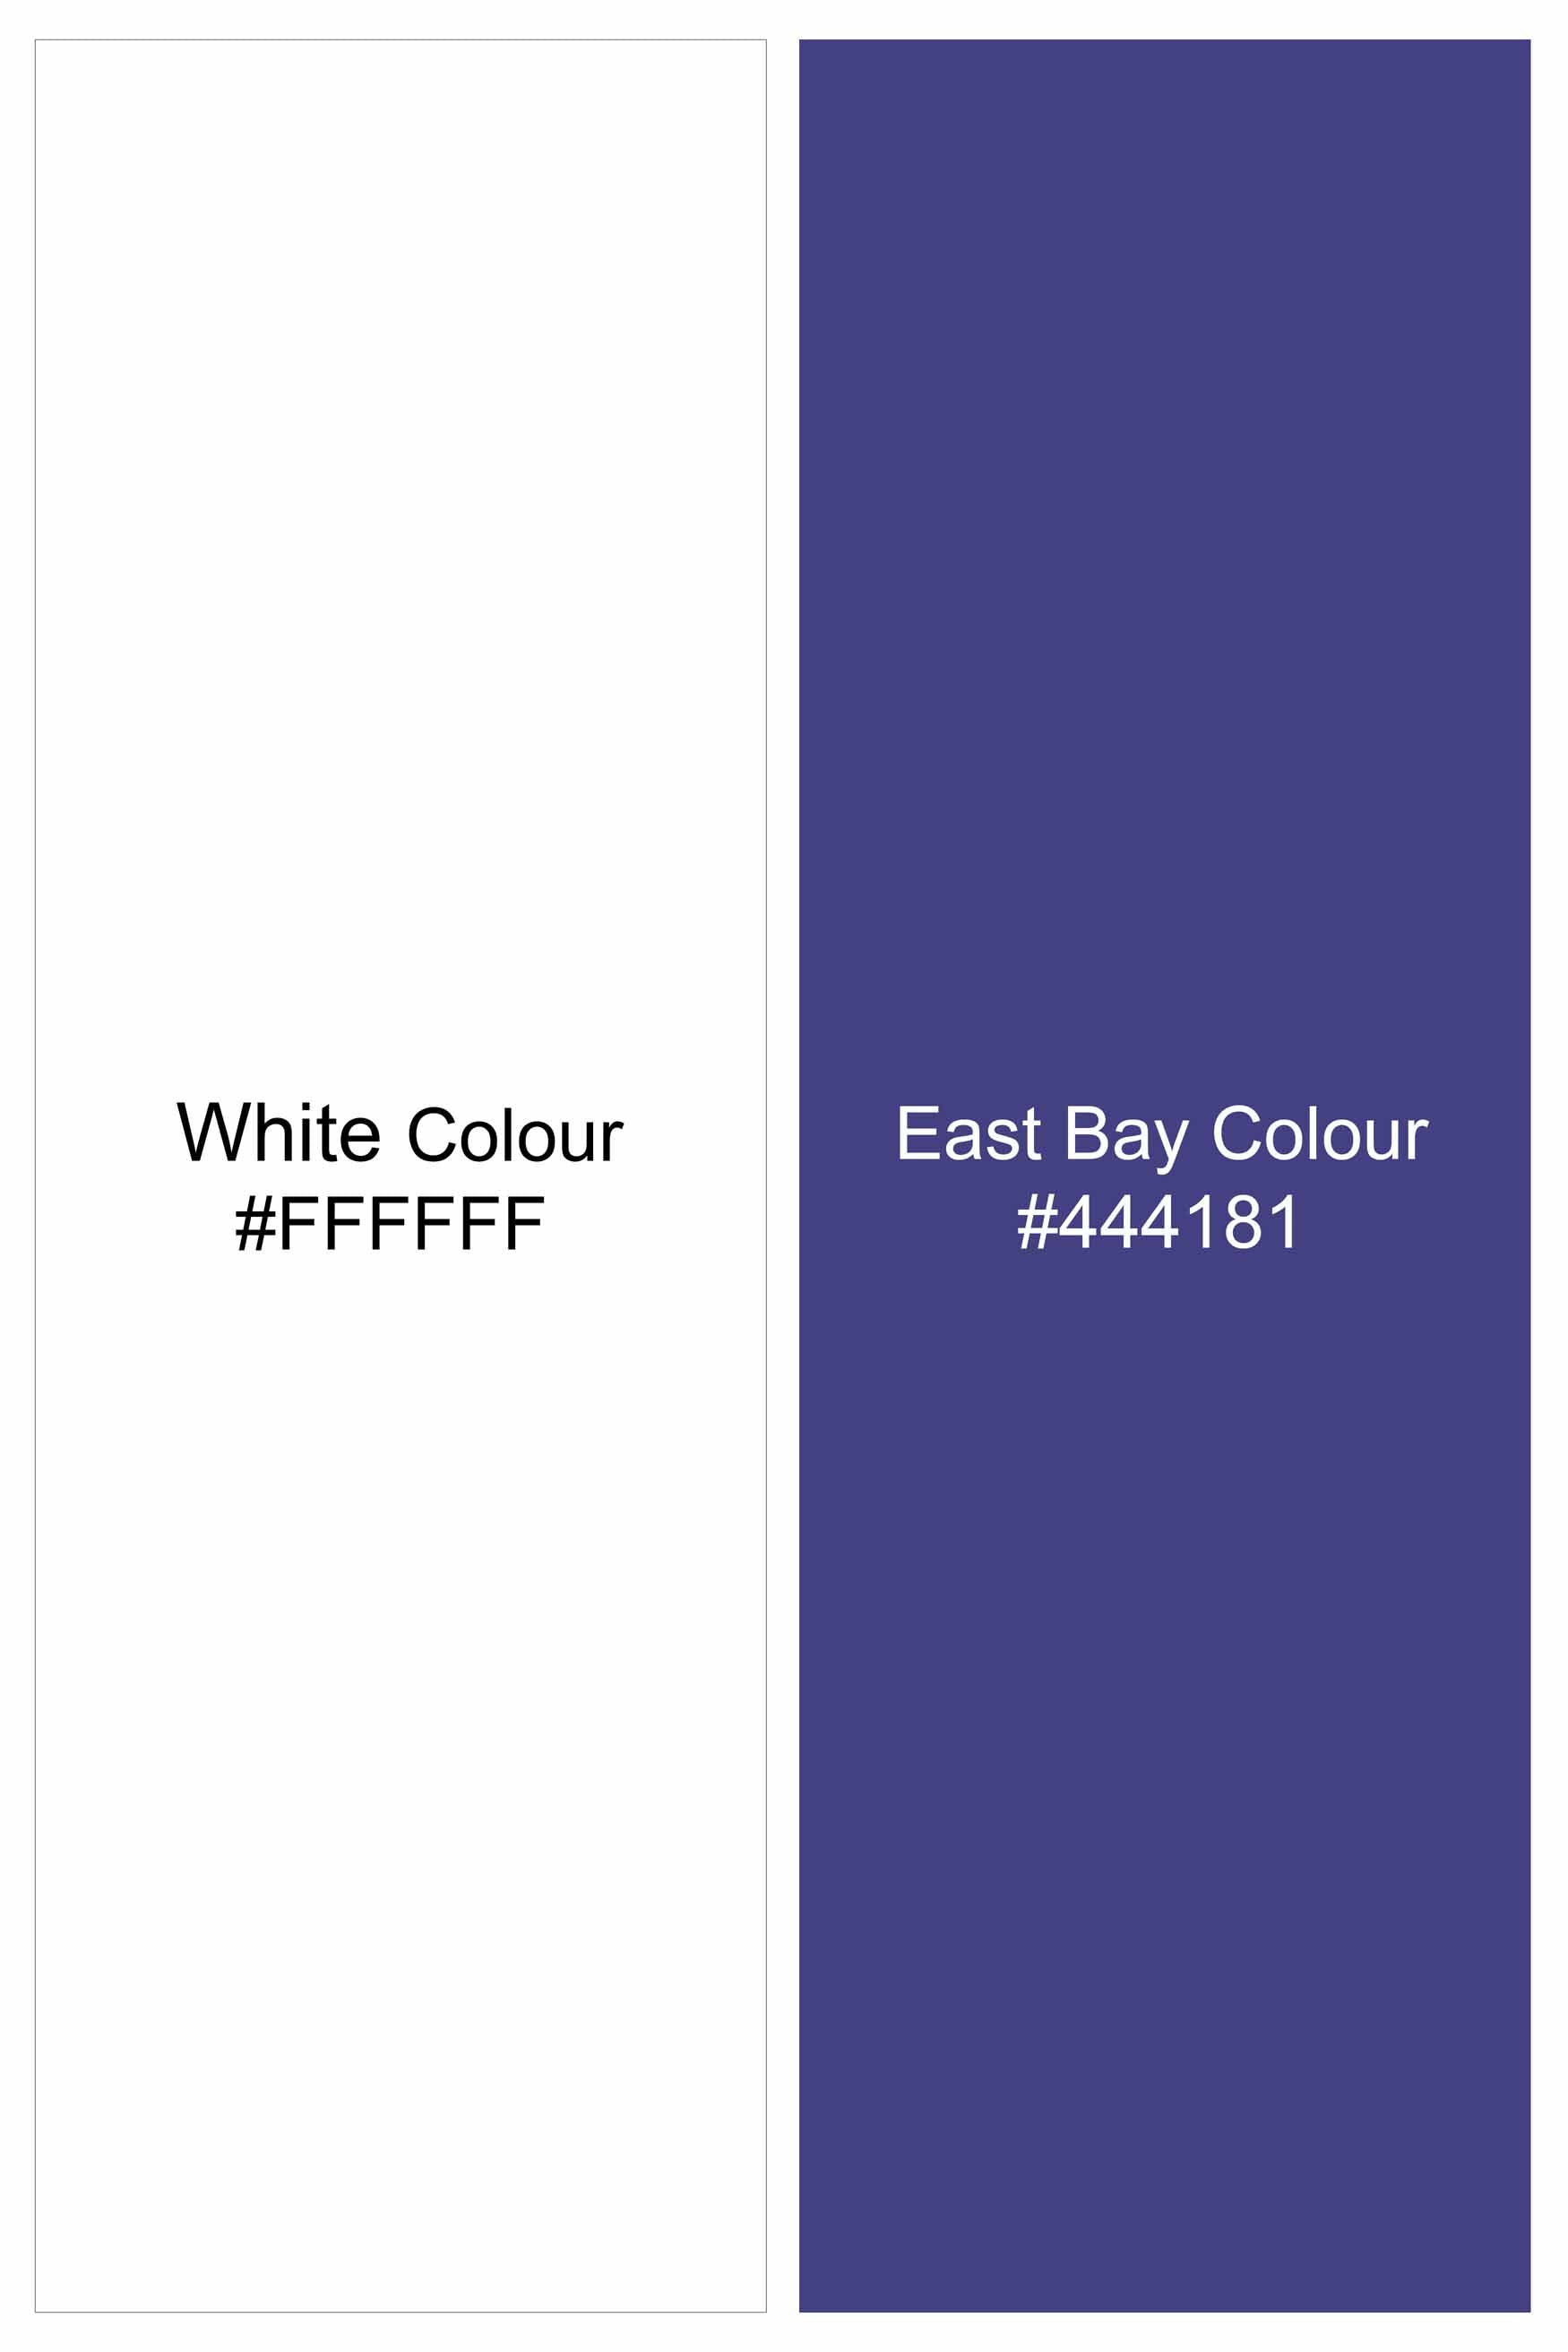 Bright White and East Bay Blue Patchwork Luxurious Linen Designer Shirt 8030-BLE-E292-38, 8030-BLE-E292-H-38, 8030-BLE-E292-39, 8030-BLE-E292-H-39, 8030-BLE-E292-40, 8030-BLE-E292-H-40, 8030-BLE-E292-42, 8030-BLE-E292-H-42, 8030-BLE-E292-44, 8030-BLE-E292-H-44, 8030-BLE-E292-46, 8030-BLE-E292-H-46, 8030-BLE-E292-48, 8030-BLE-E292-H-48, 8030-BLE-E292-50, 8030-BLE-E292-H-50, 8030-BLE-E292-52, 8030-BLE-E292-H-52